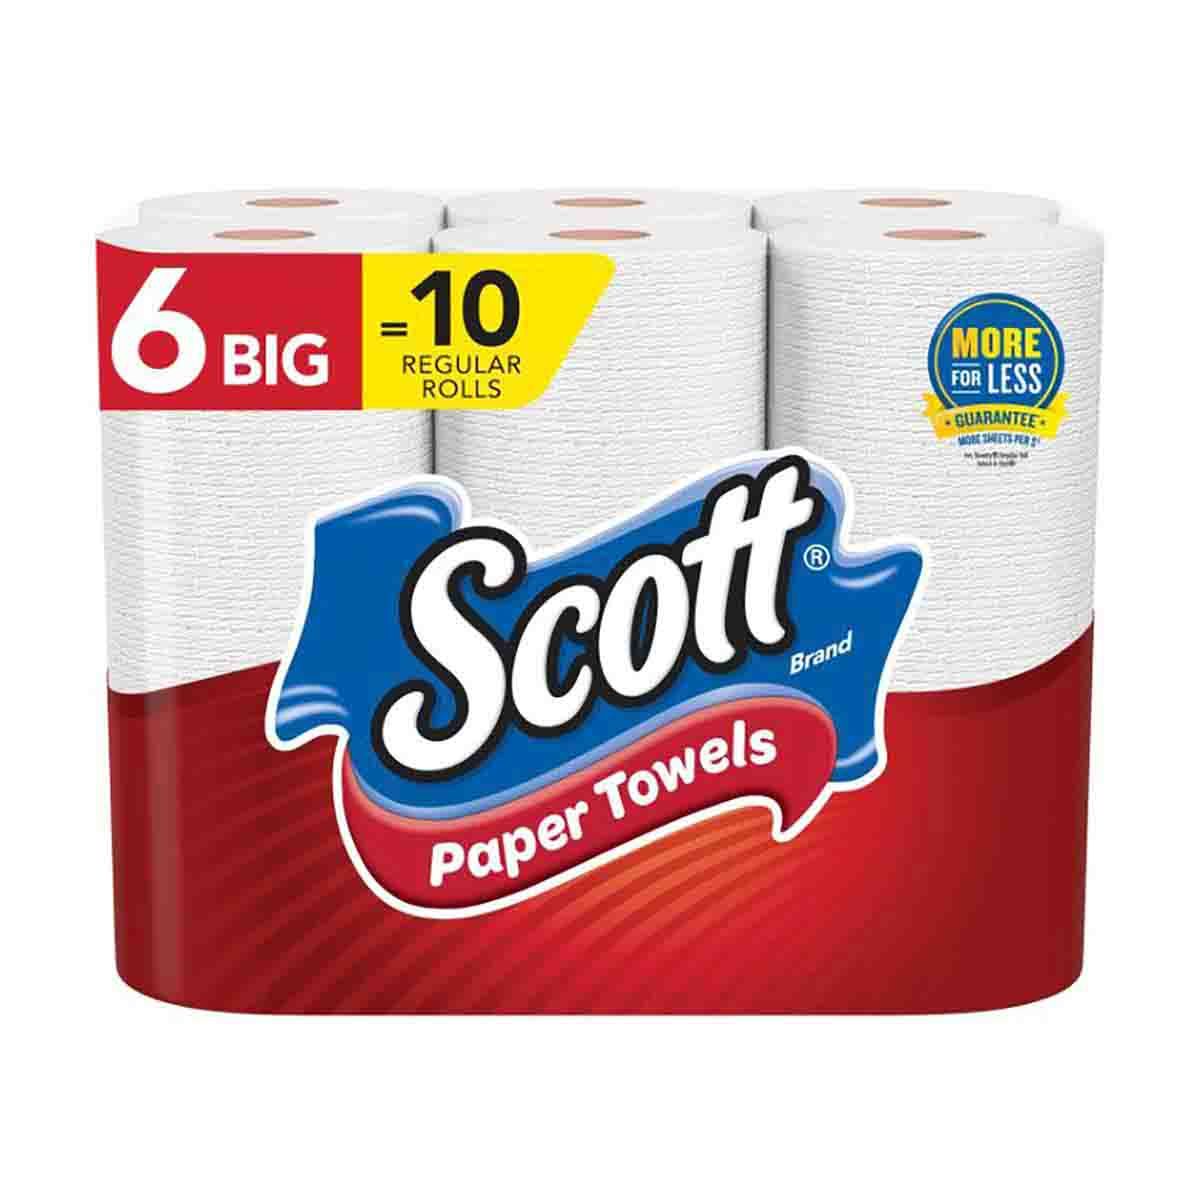 Scott Paper Towels, Choose-A-Sheet - 6 Big Rolls = 10 Regular Rolls (96 Sheets Per Roll) on Sale At Dollar General